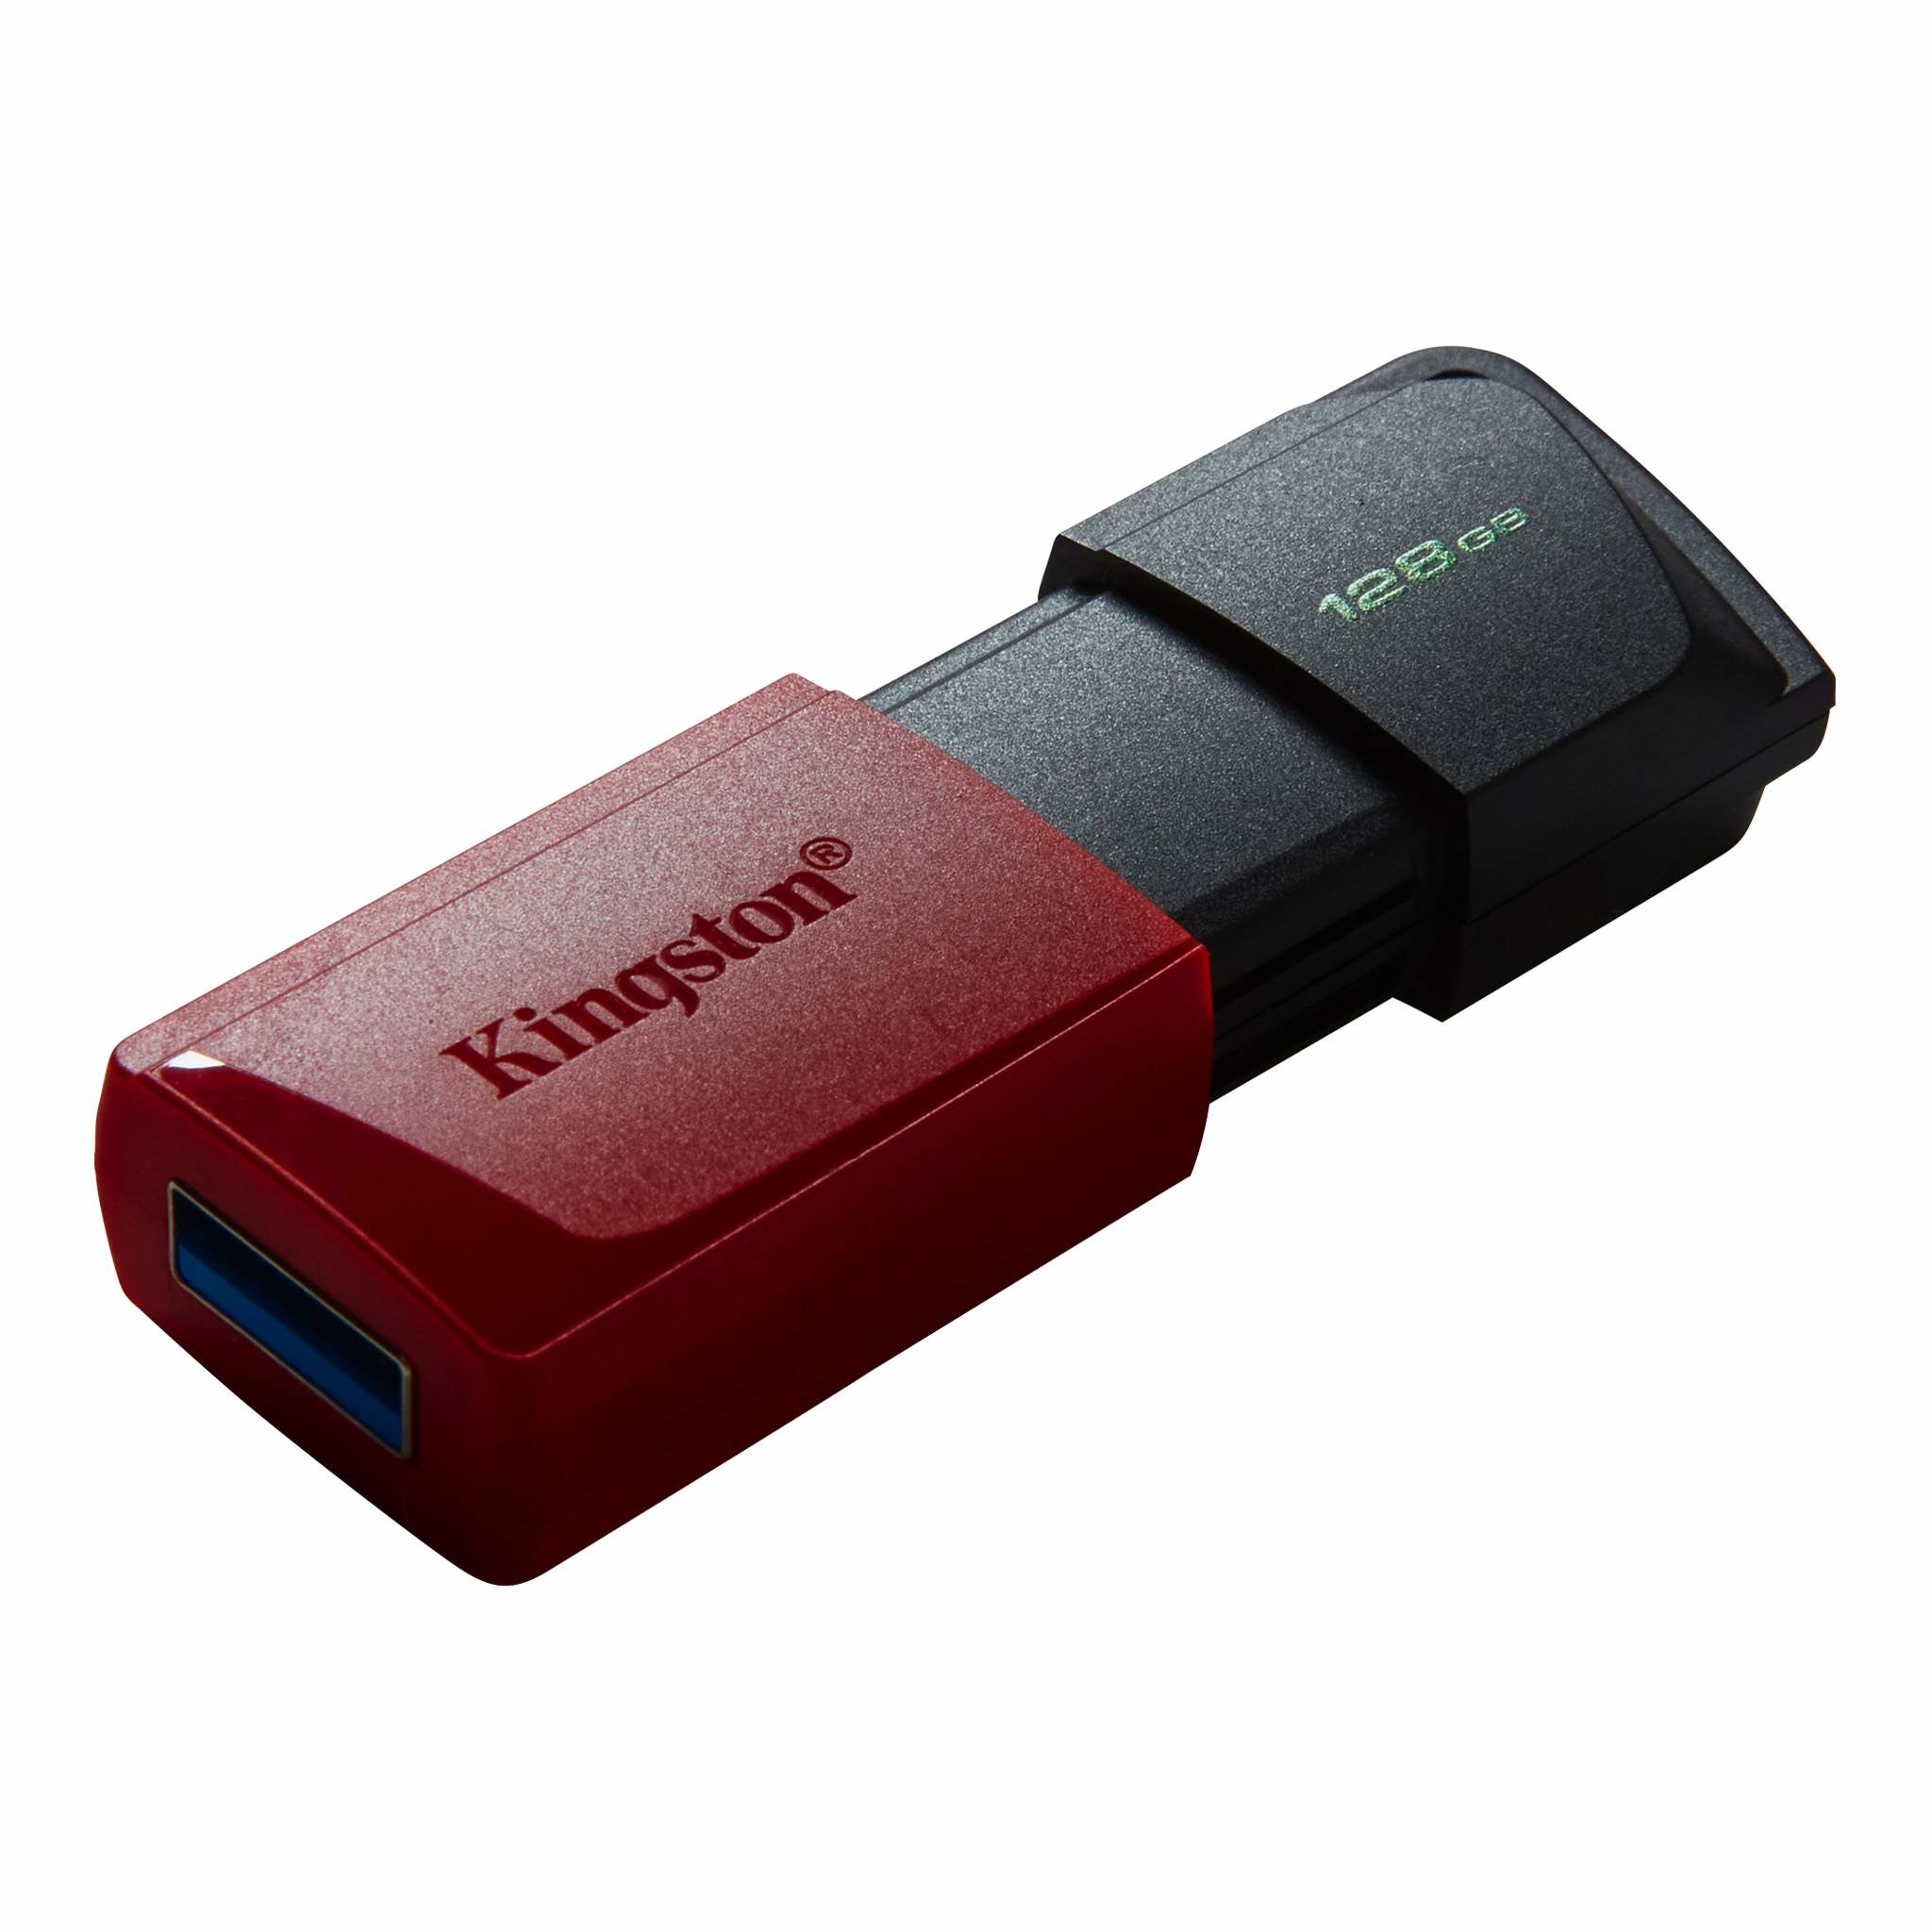 Kingston Technology DataTraveler Exodia M USB-Stick 128 GB USB Typ-A 3.2 Gen 1 (3.1 Gen 1) Schwarz, Rot